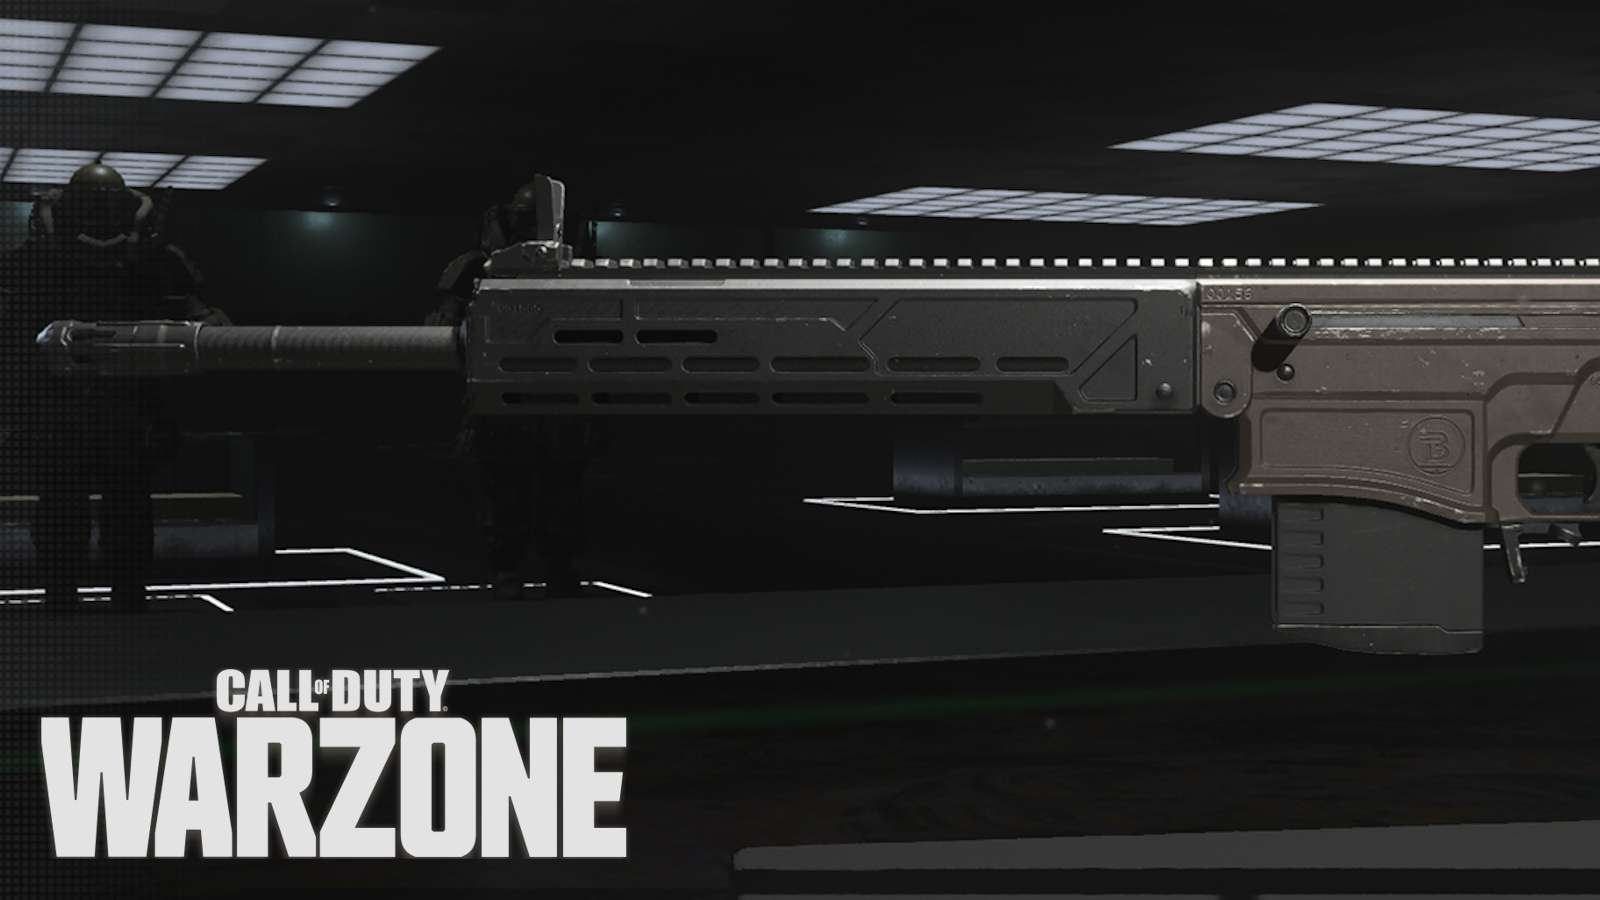 KVD Enforcer marksman rifle with Warzone logo.